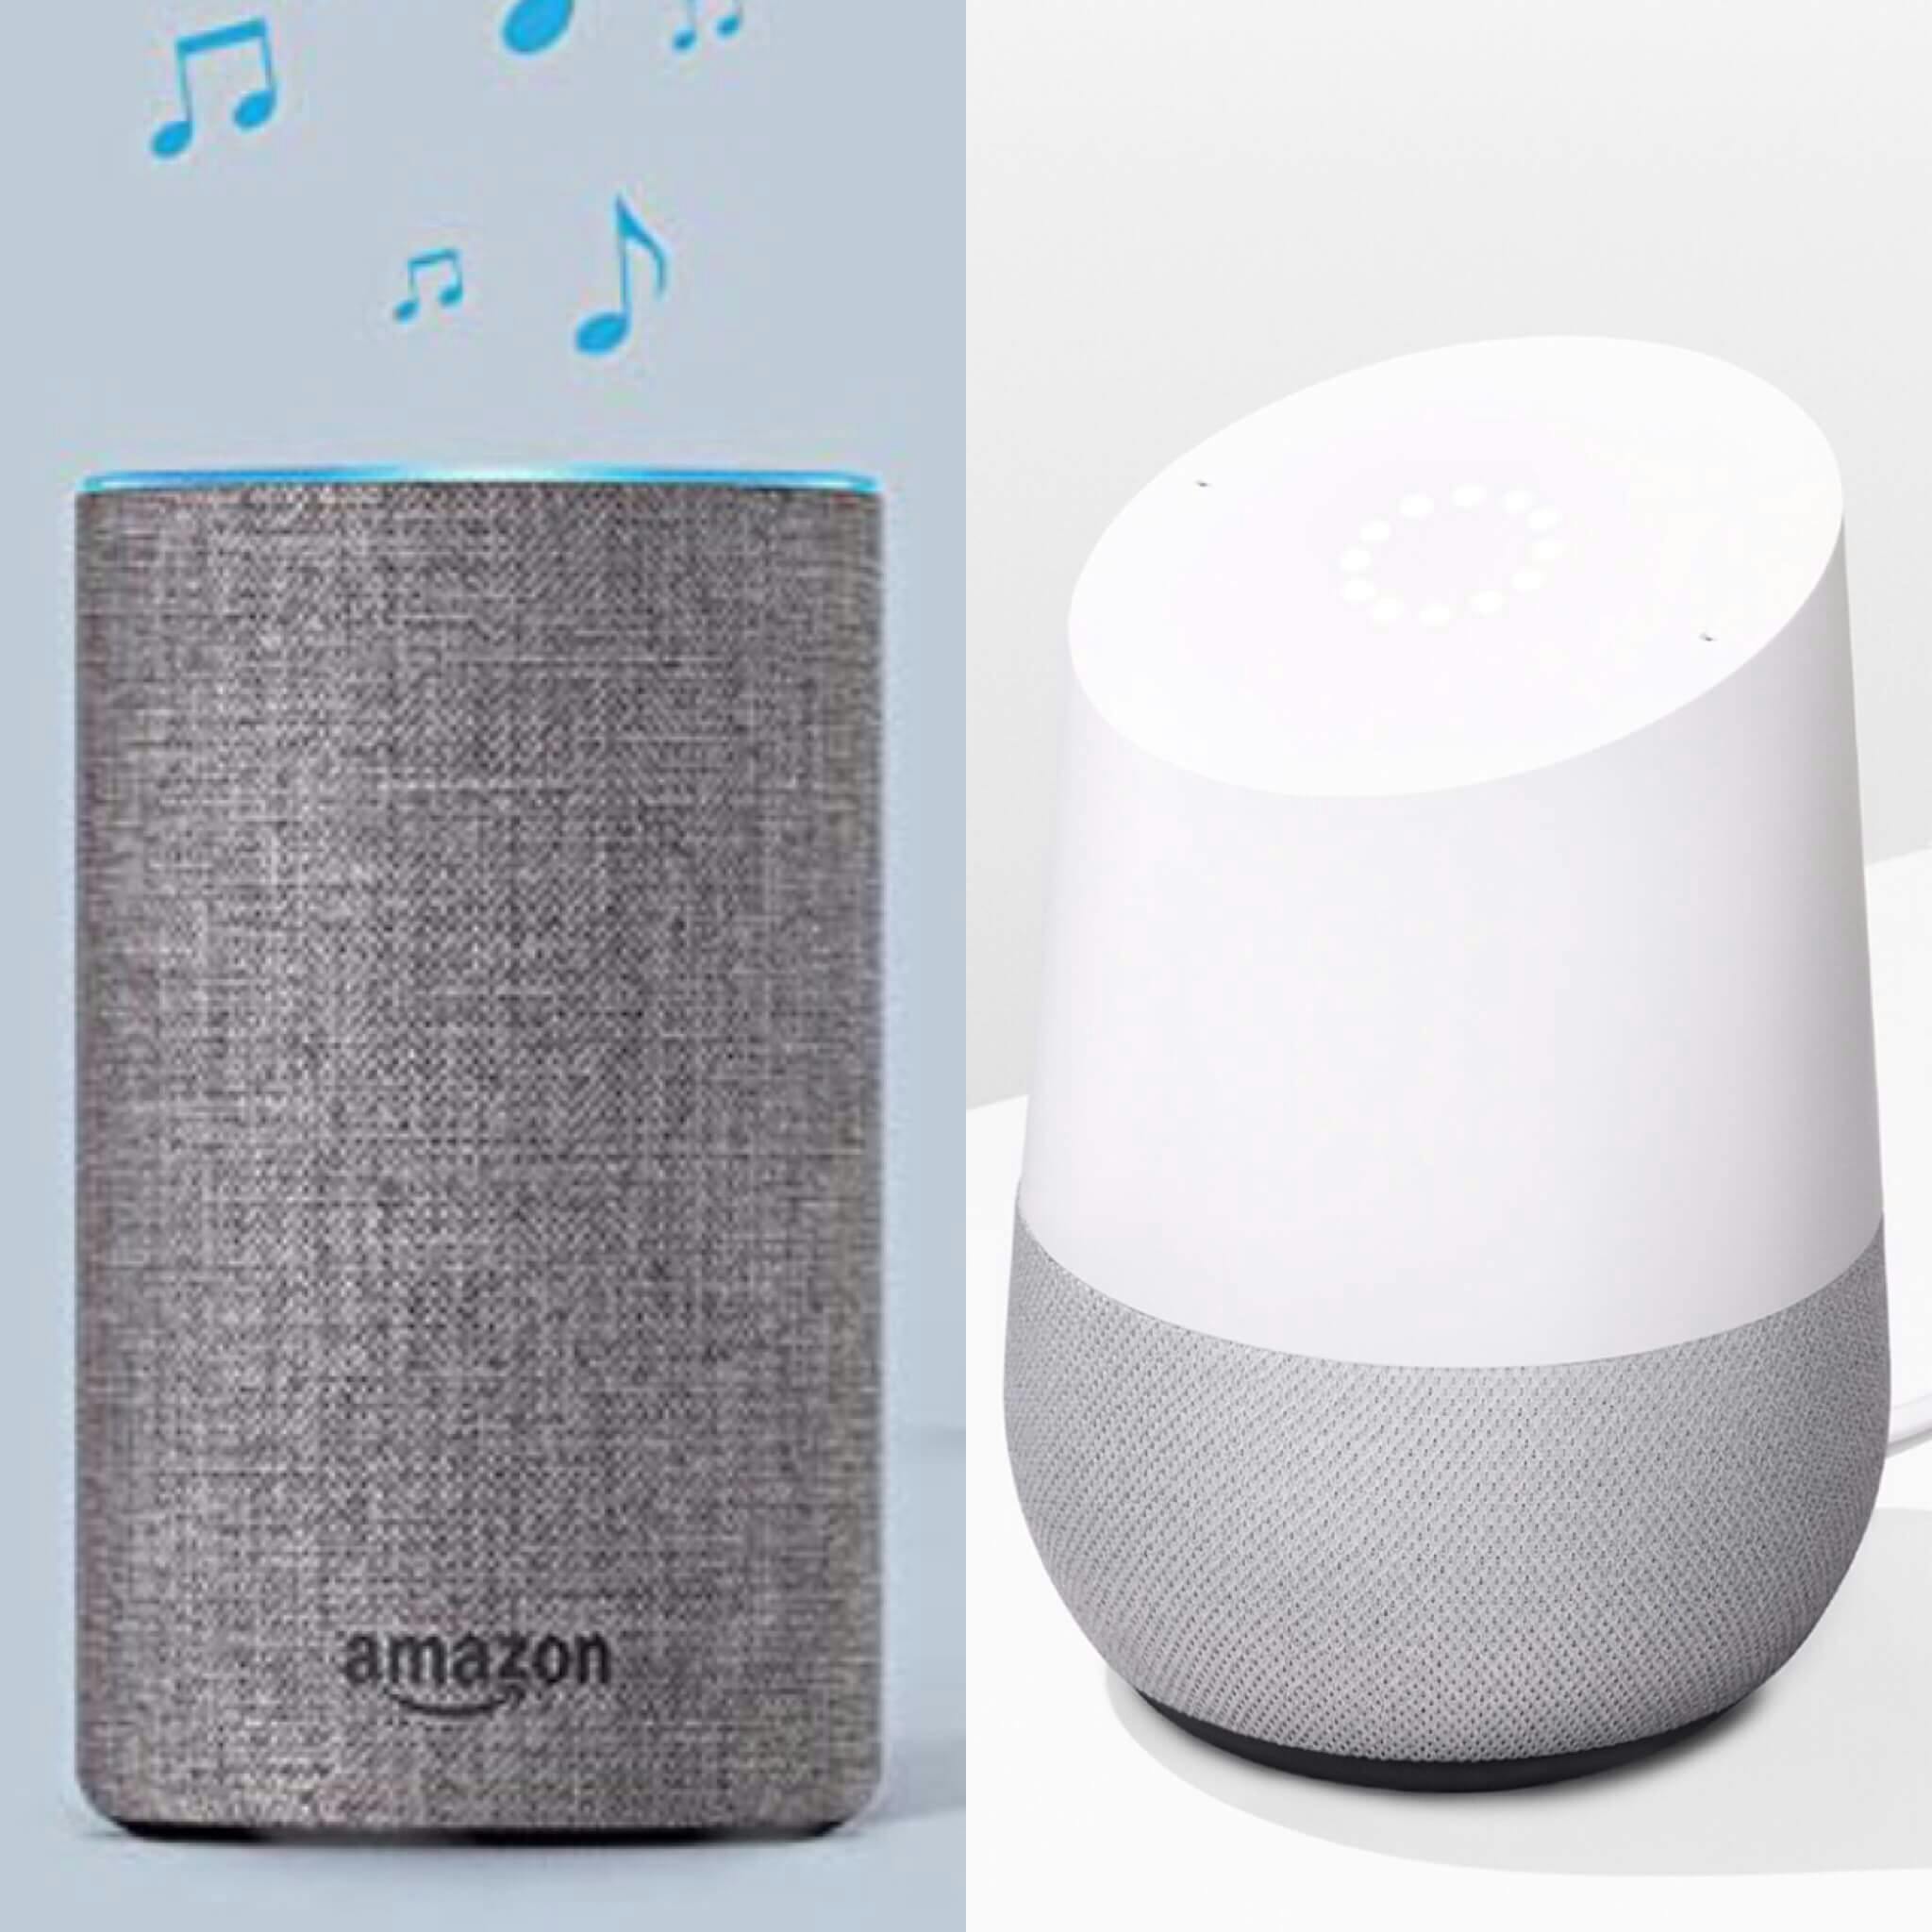 Amazon Echo vs Google Home - Who Wins The Battle?